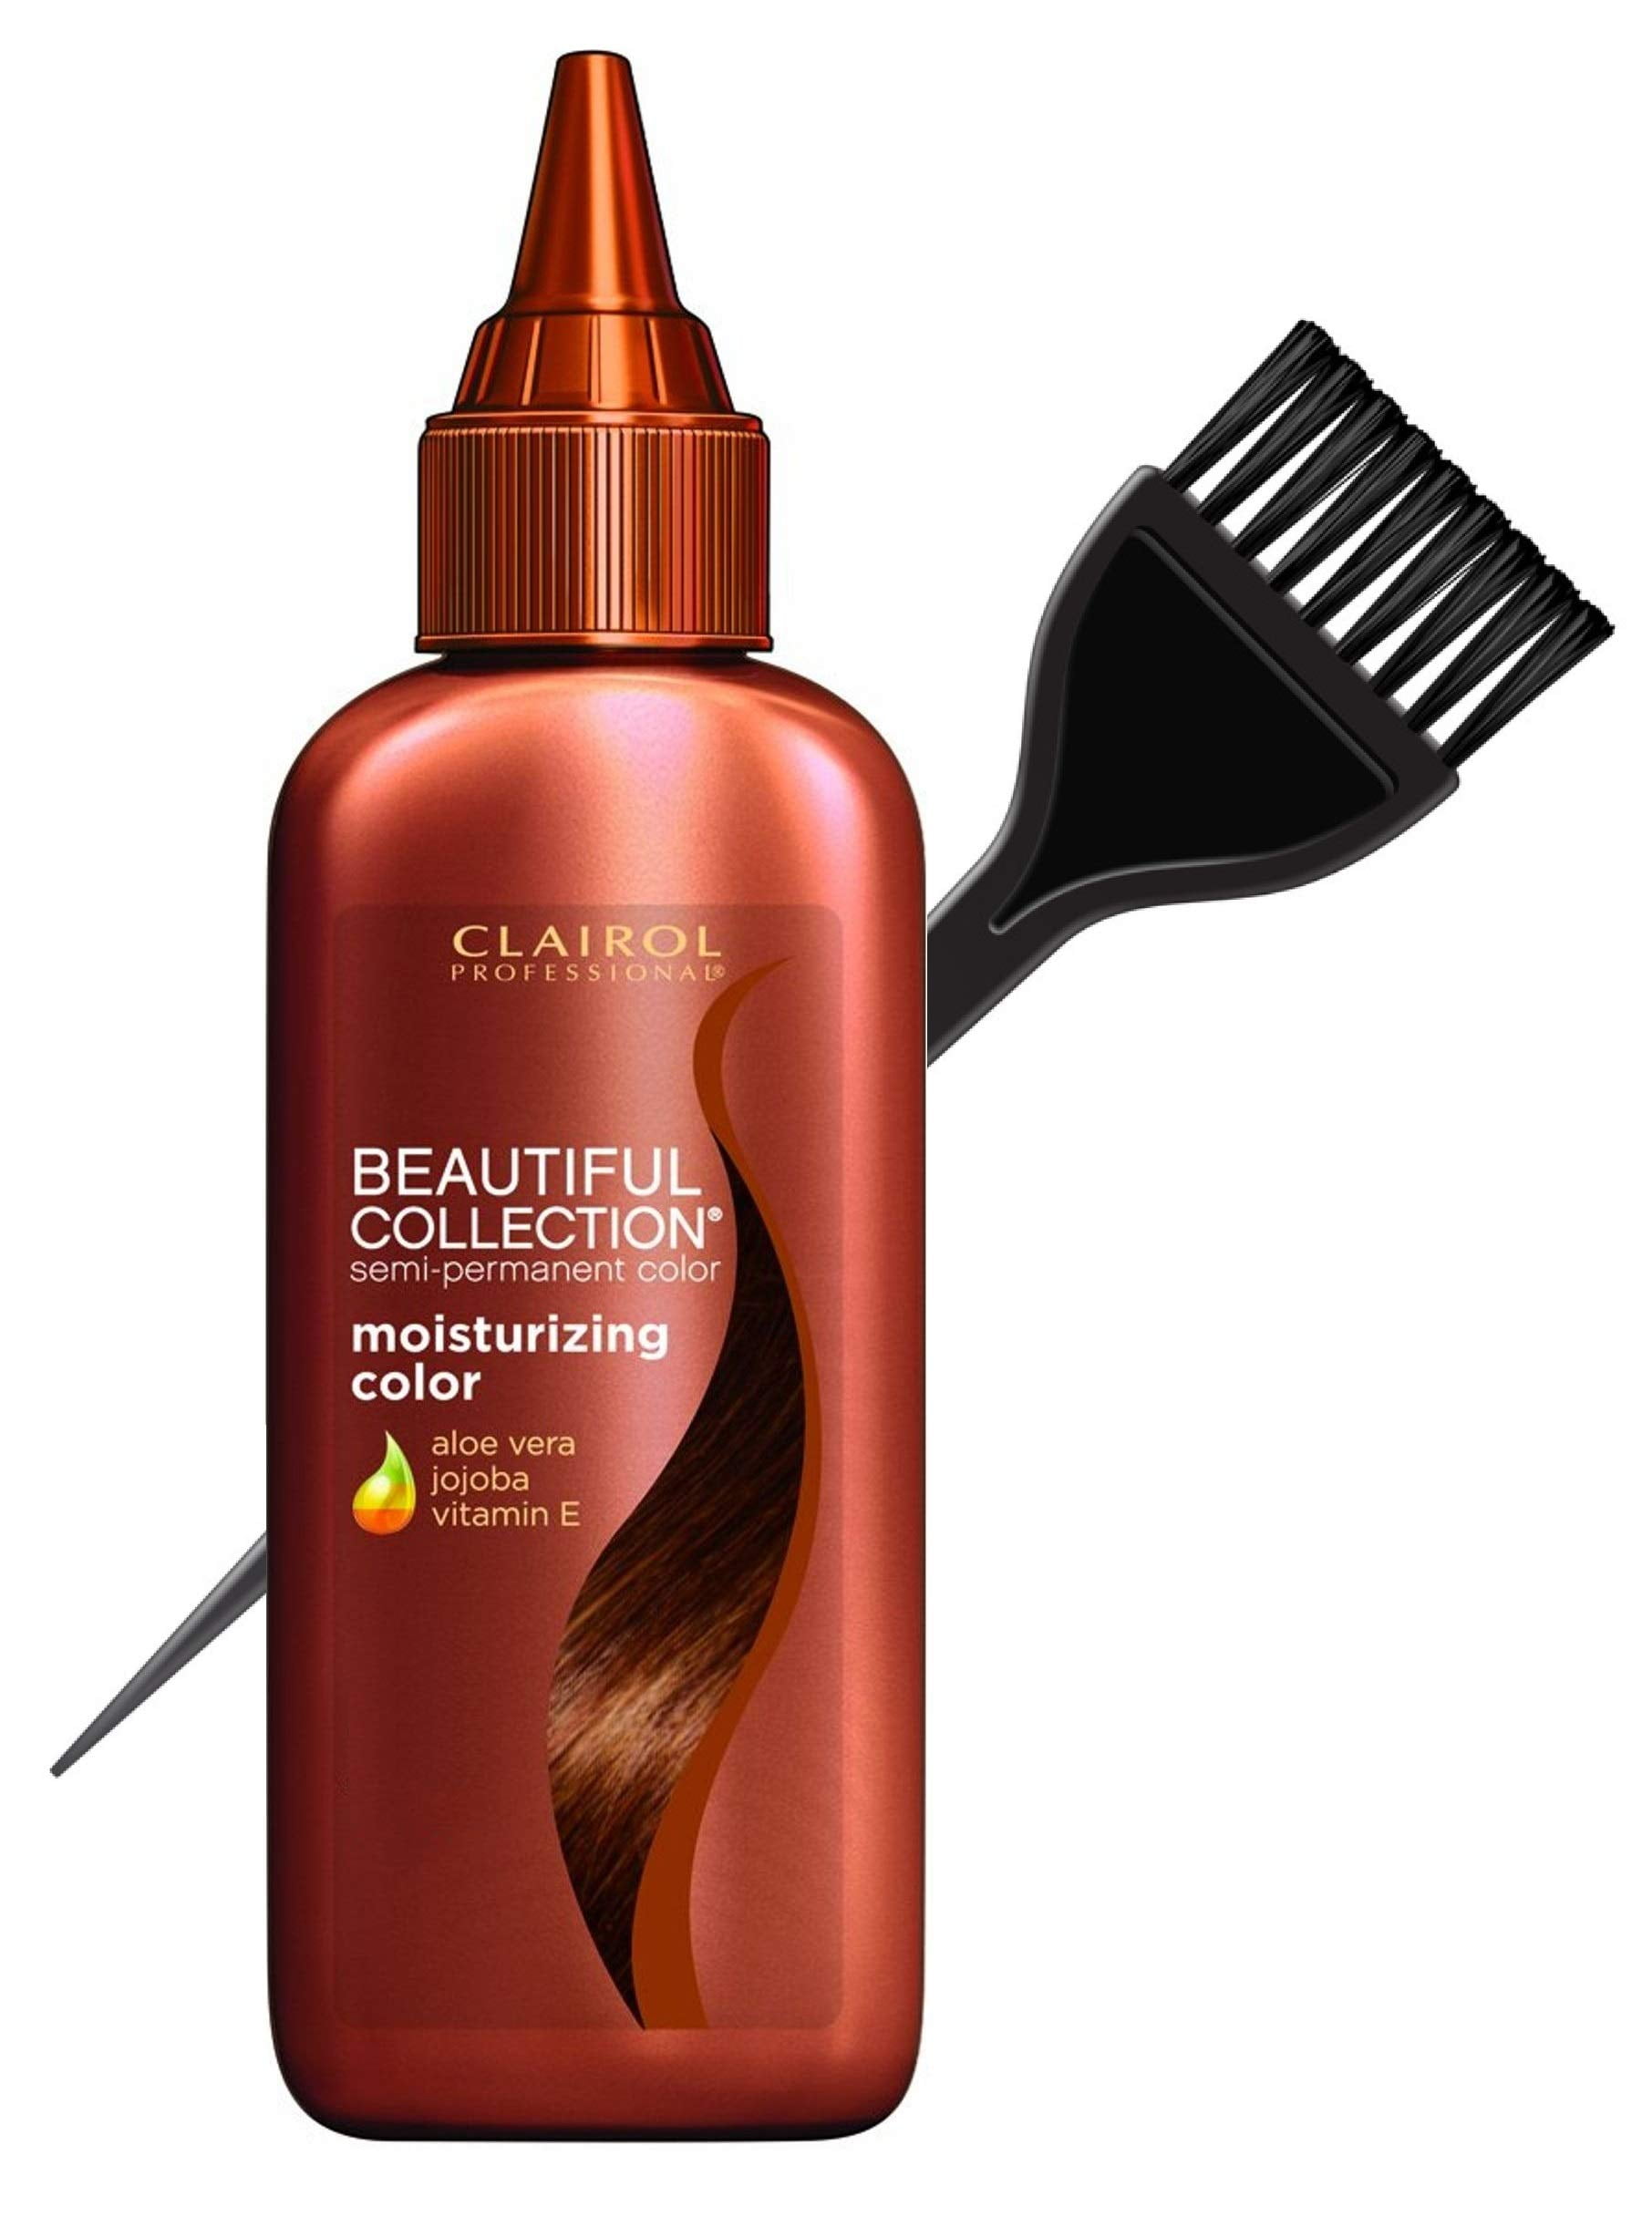 Clairol BEAUTIFUL COLLECTION Moisturizing SEMI-PERMANENT Hair Color Dye  (w/Sleek Tint Brush) No Ammonia No Peroxide Haircolor Aloe Vera Jojoba  Vitamin E (B15W - Dark Warm Brown) 